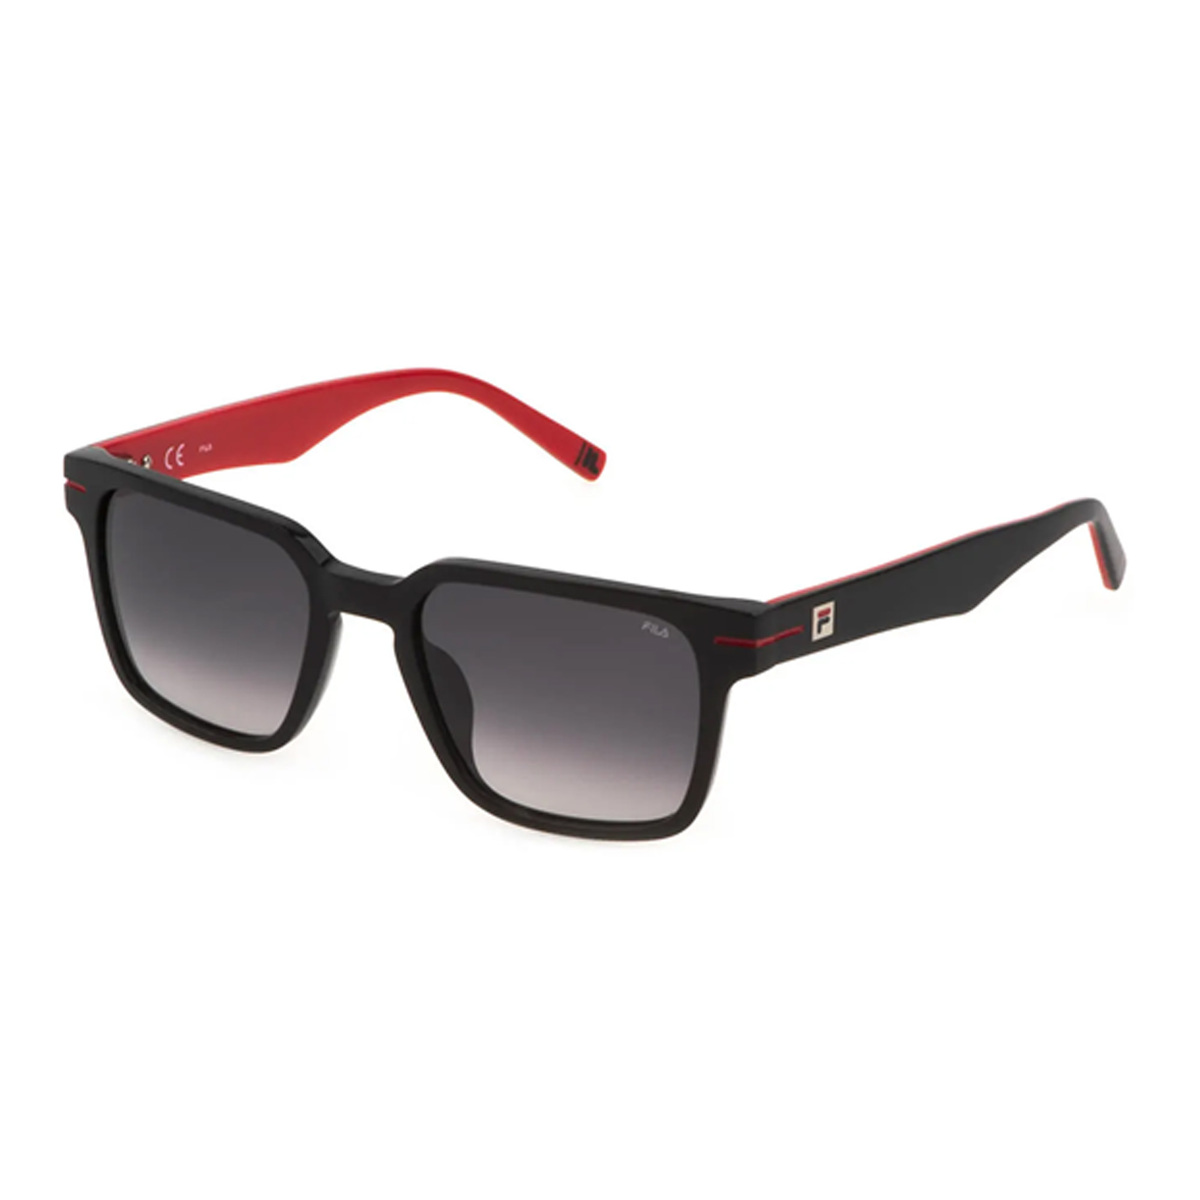 Fila Men's Square Sunglasses, Smoke Gradient, SFI209 53700Y Sqr Blk